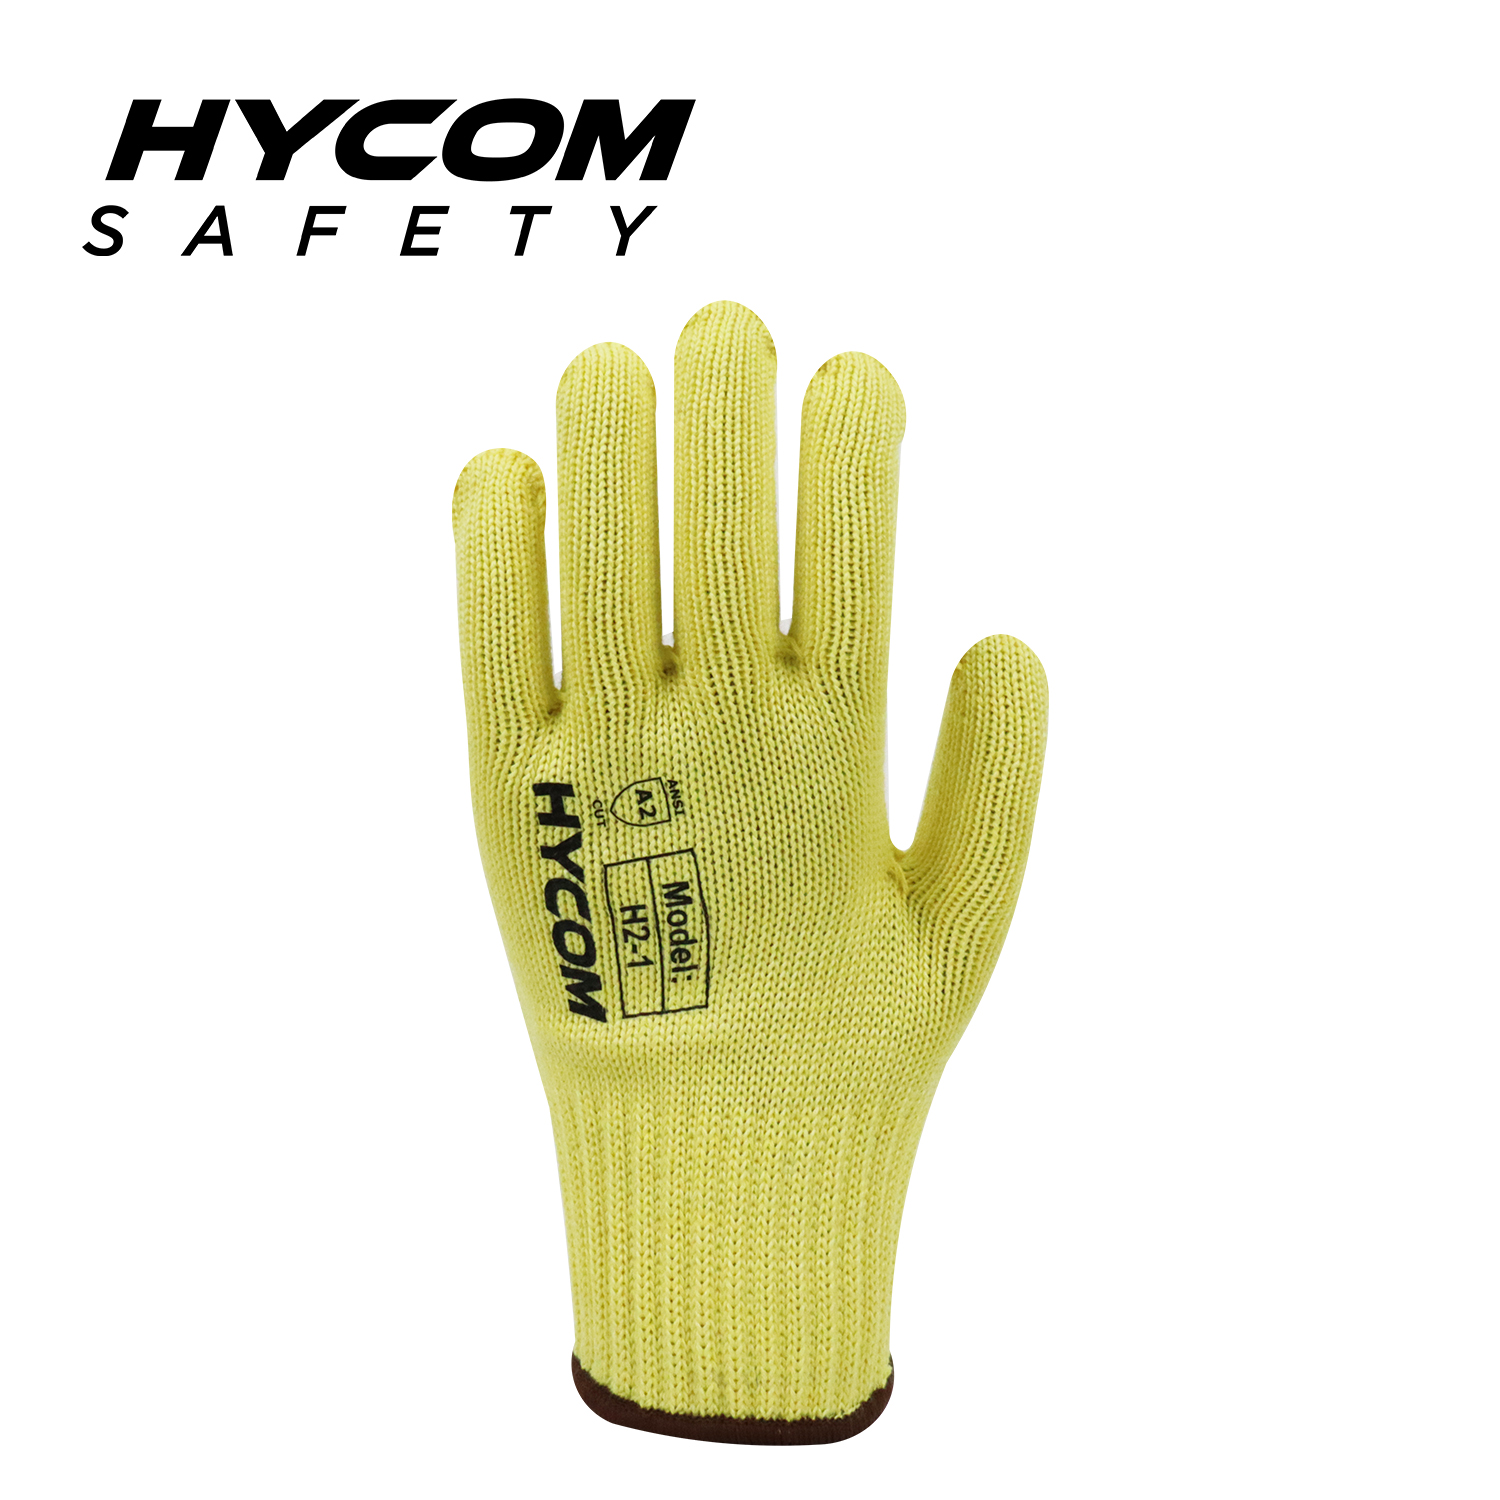 HYCOM 7G Level 3 ANSI 2 Aramid Cut Resistant Glove PPE Work Gloves